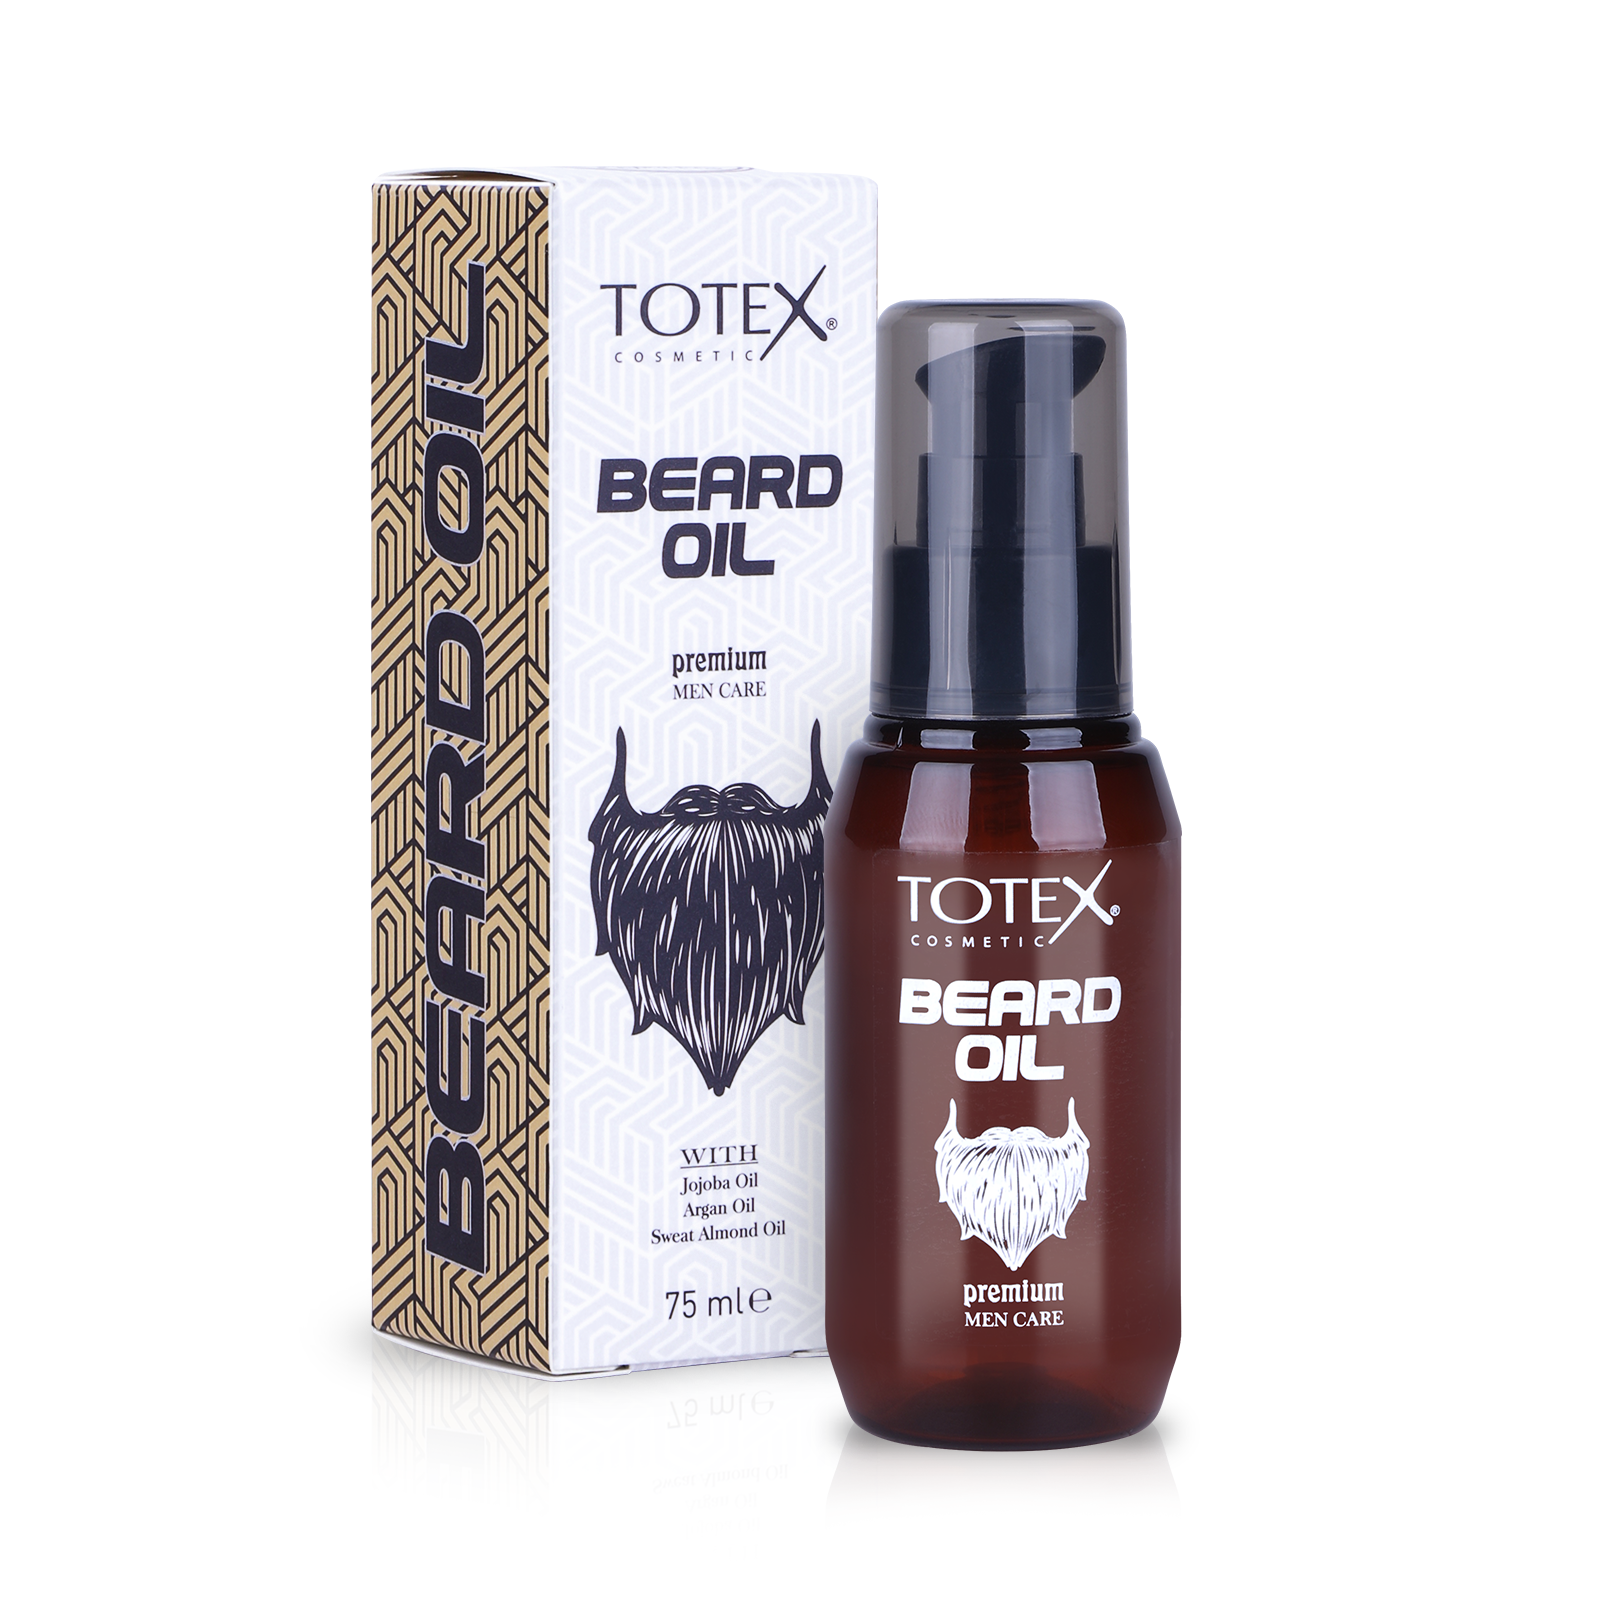 totex sensitive shaving gel image